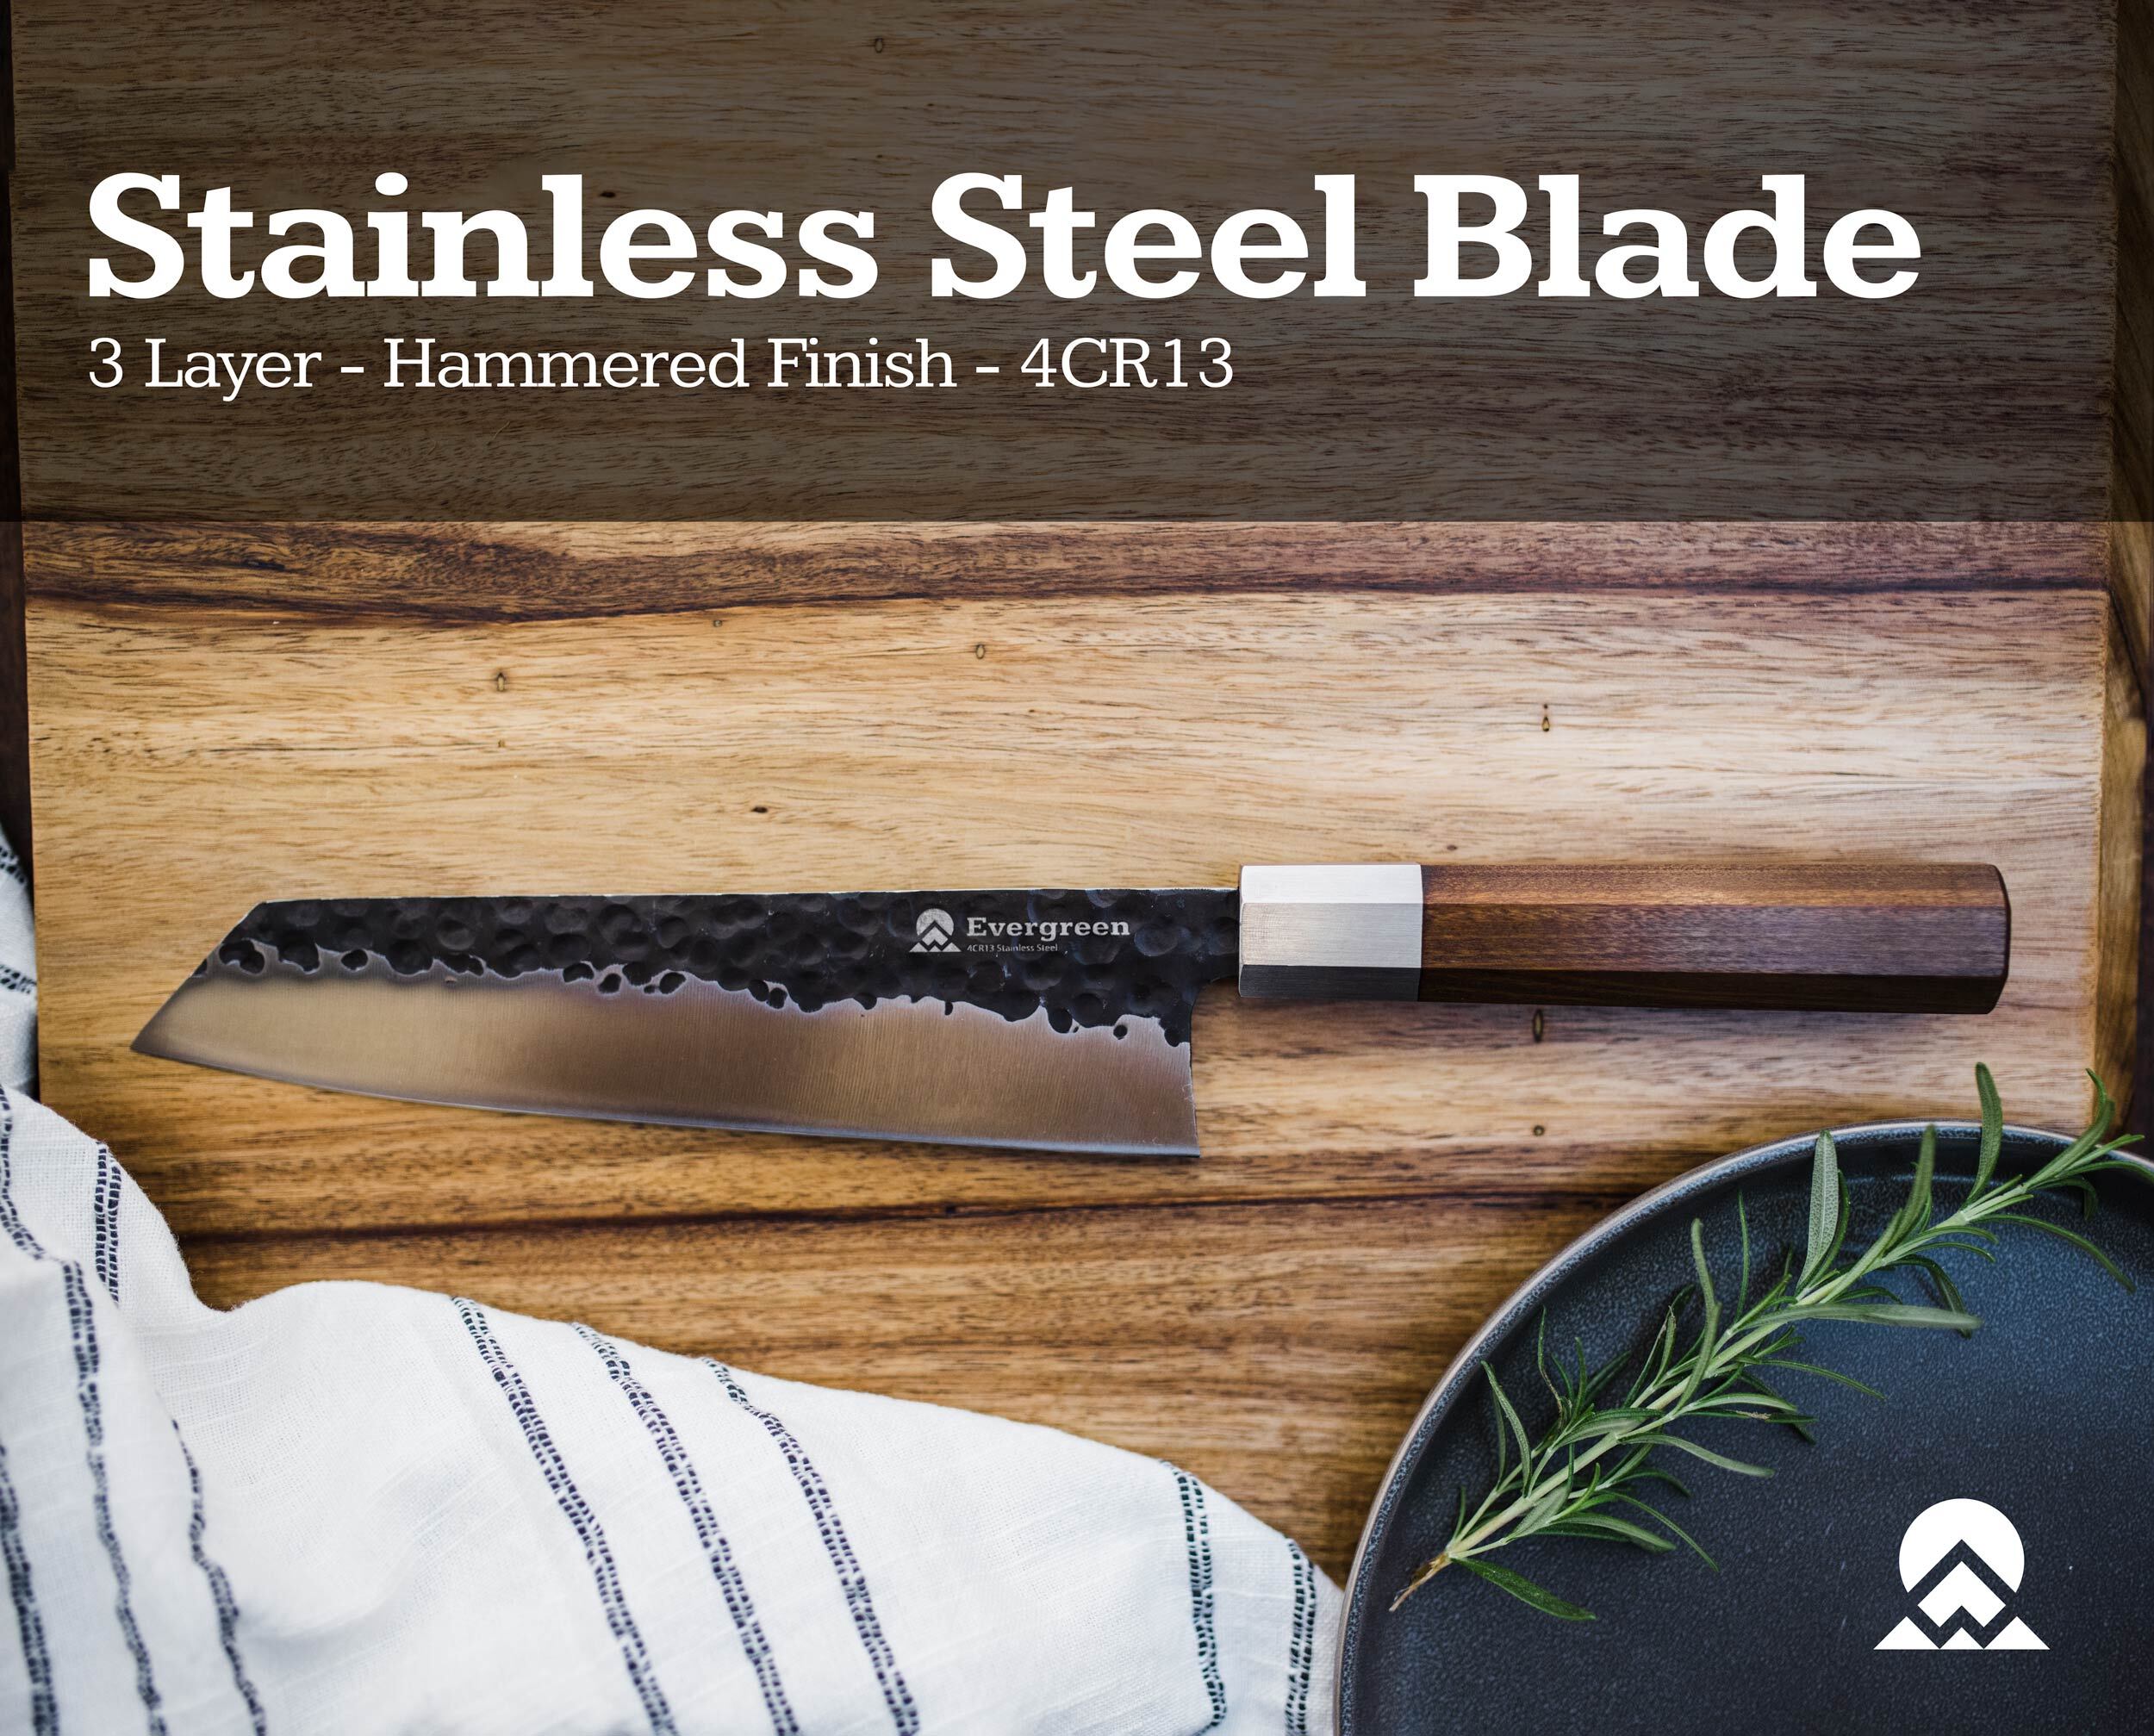 Stainless-Steel-Knife-Image.jpg